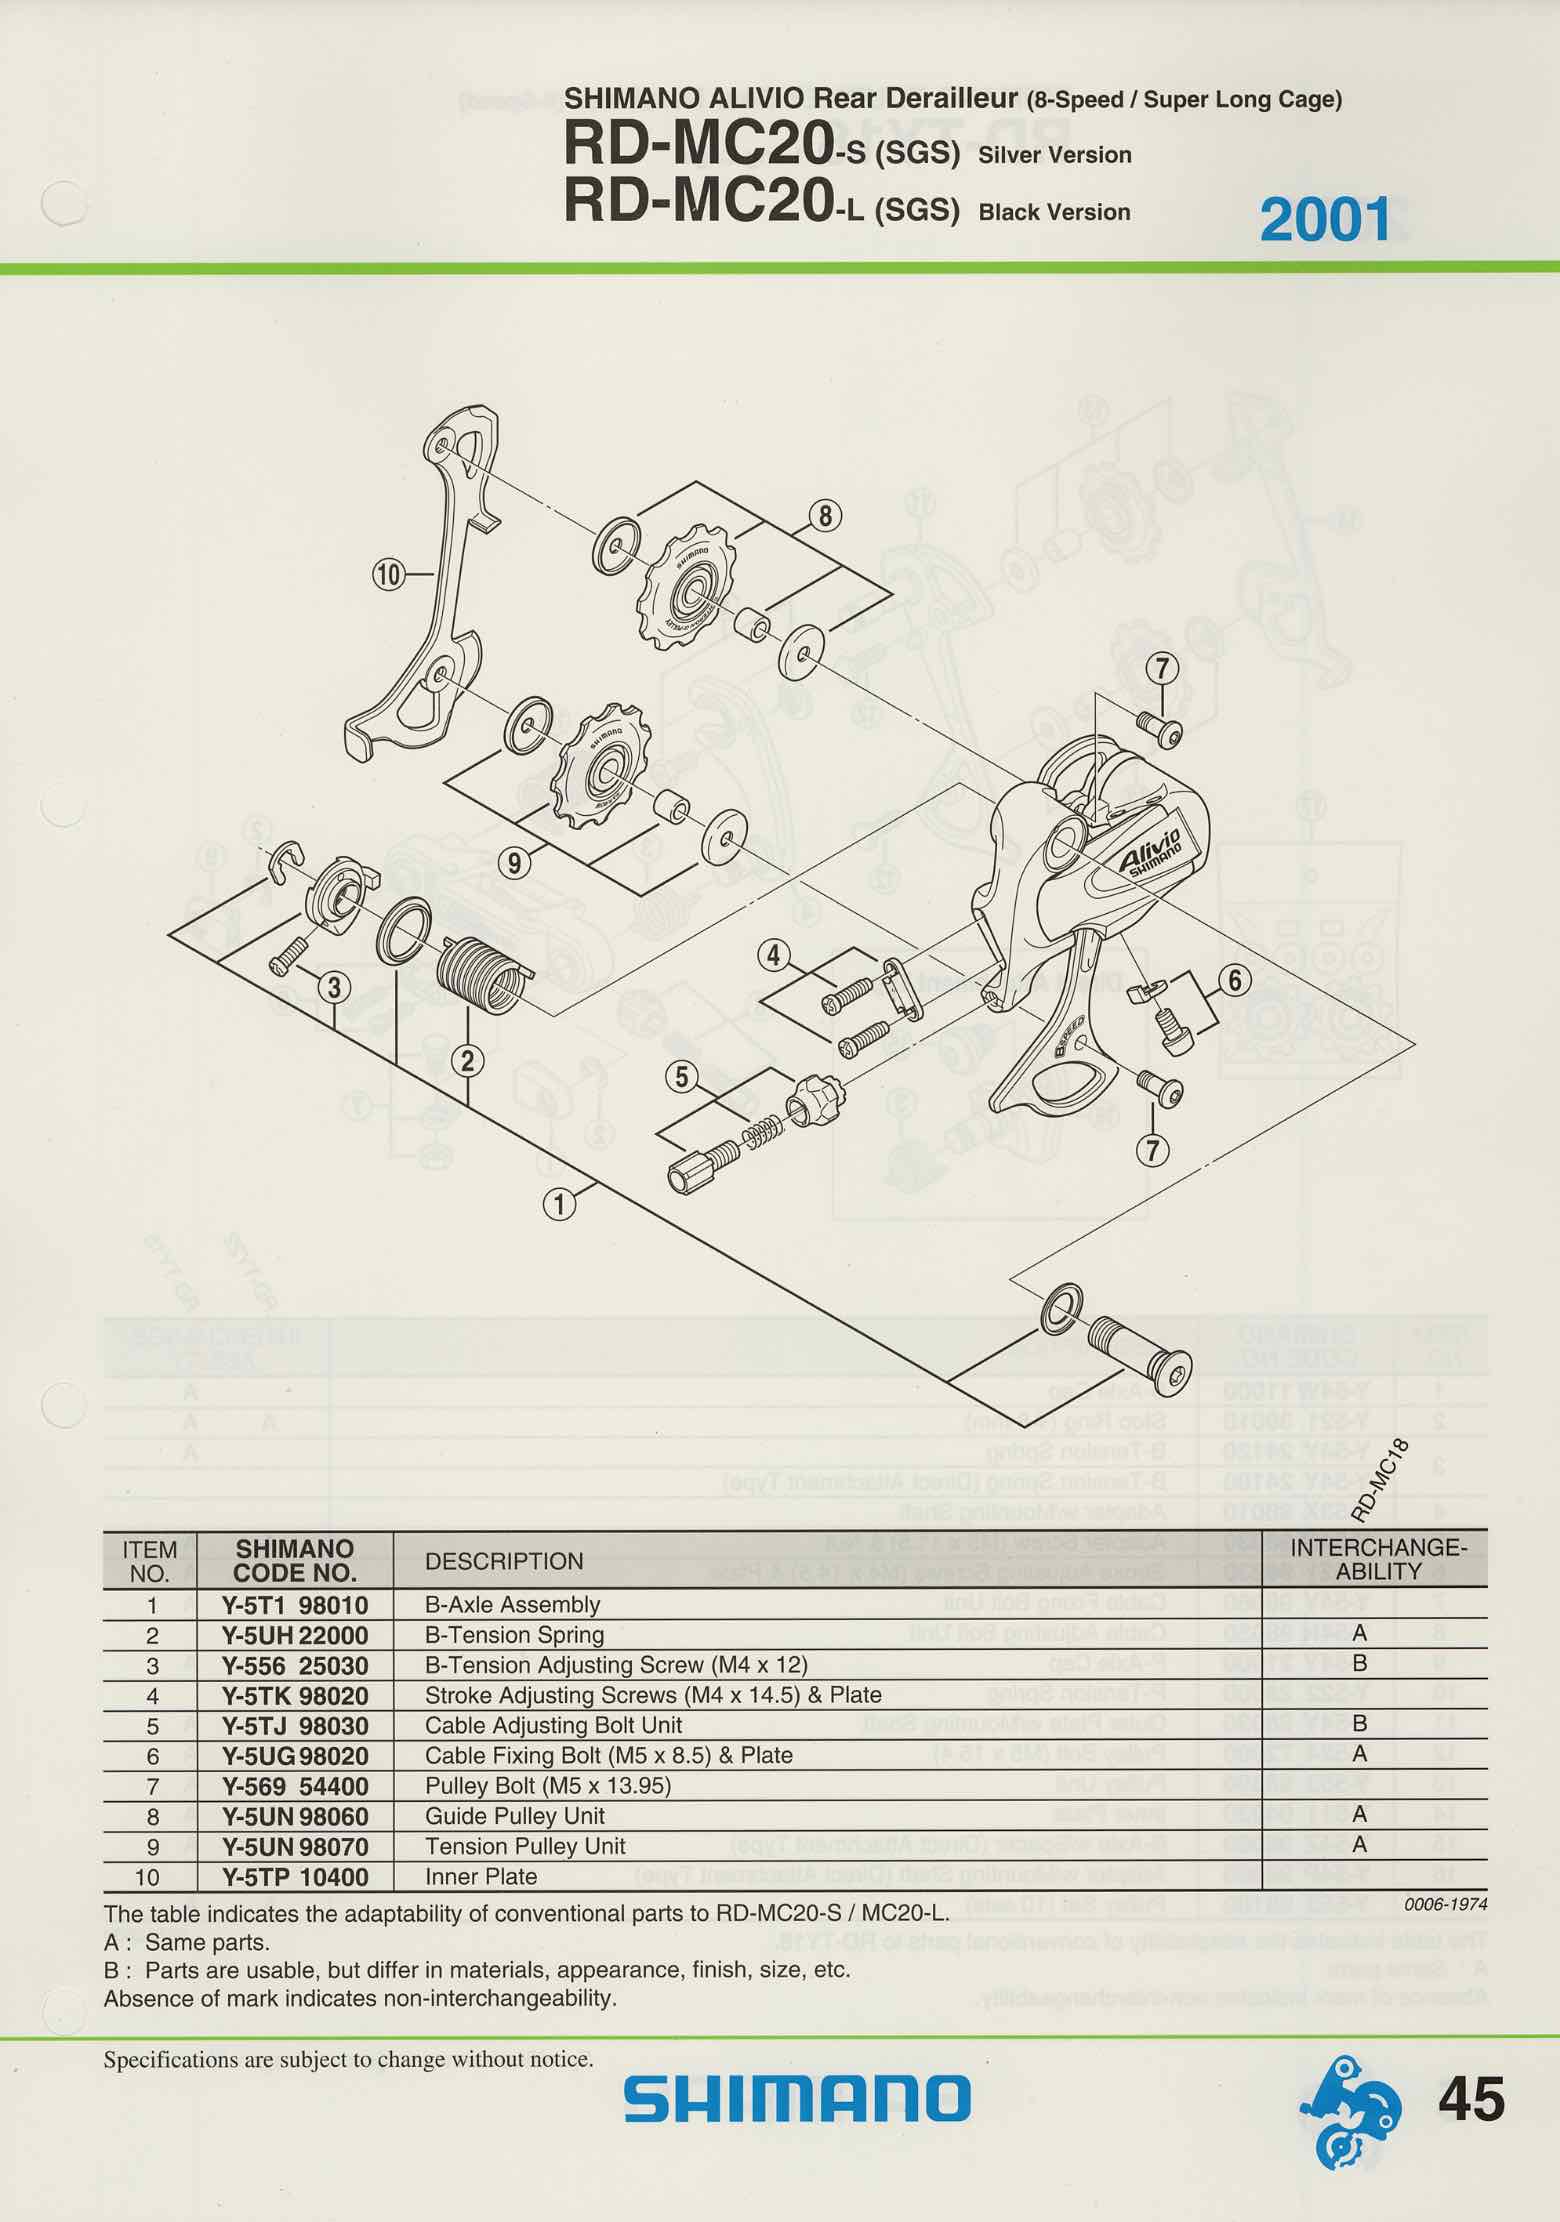 Shimano Spare Parts Catalogue - 1994 to 2004 s5 p45 main image